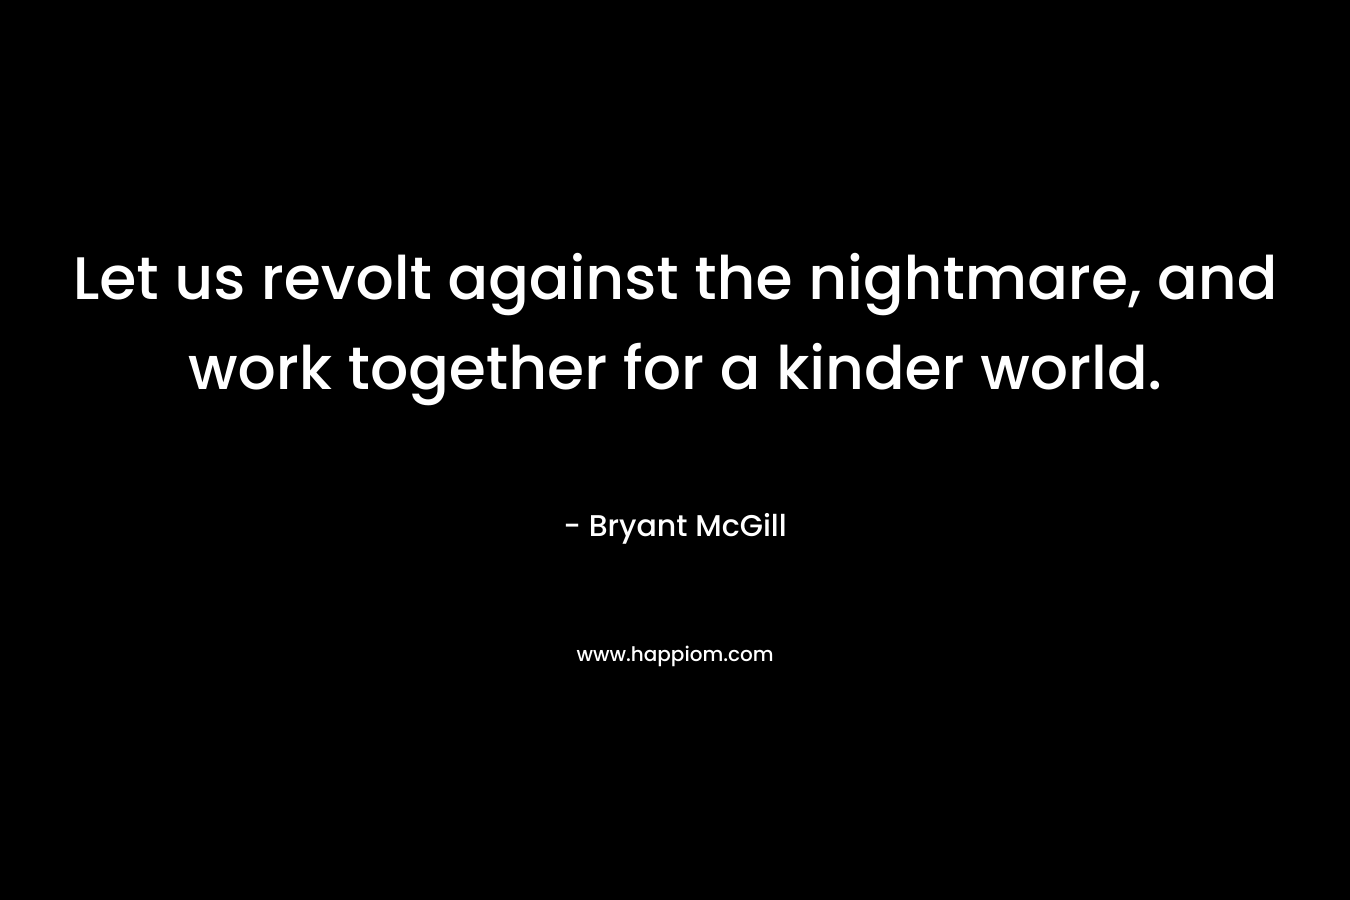 Let us revolt against the nightmare, and work together for a kinder world.